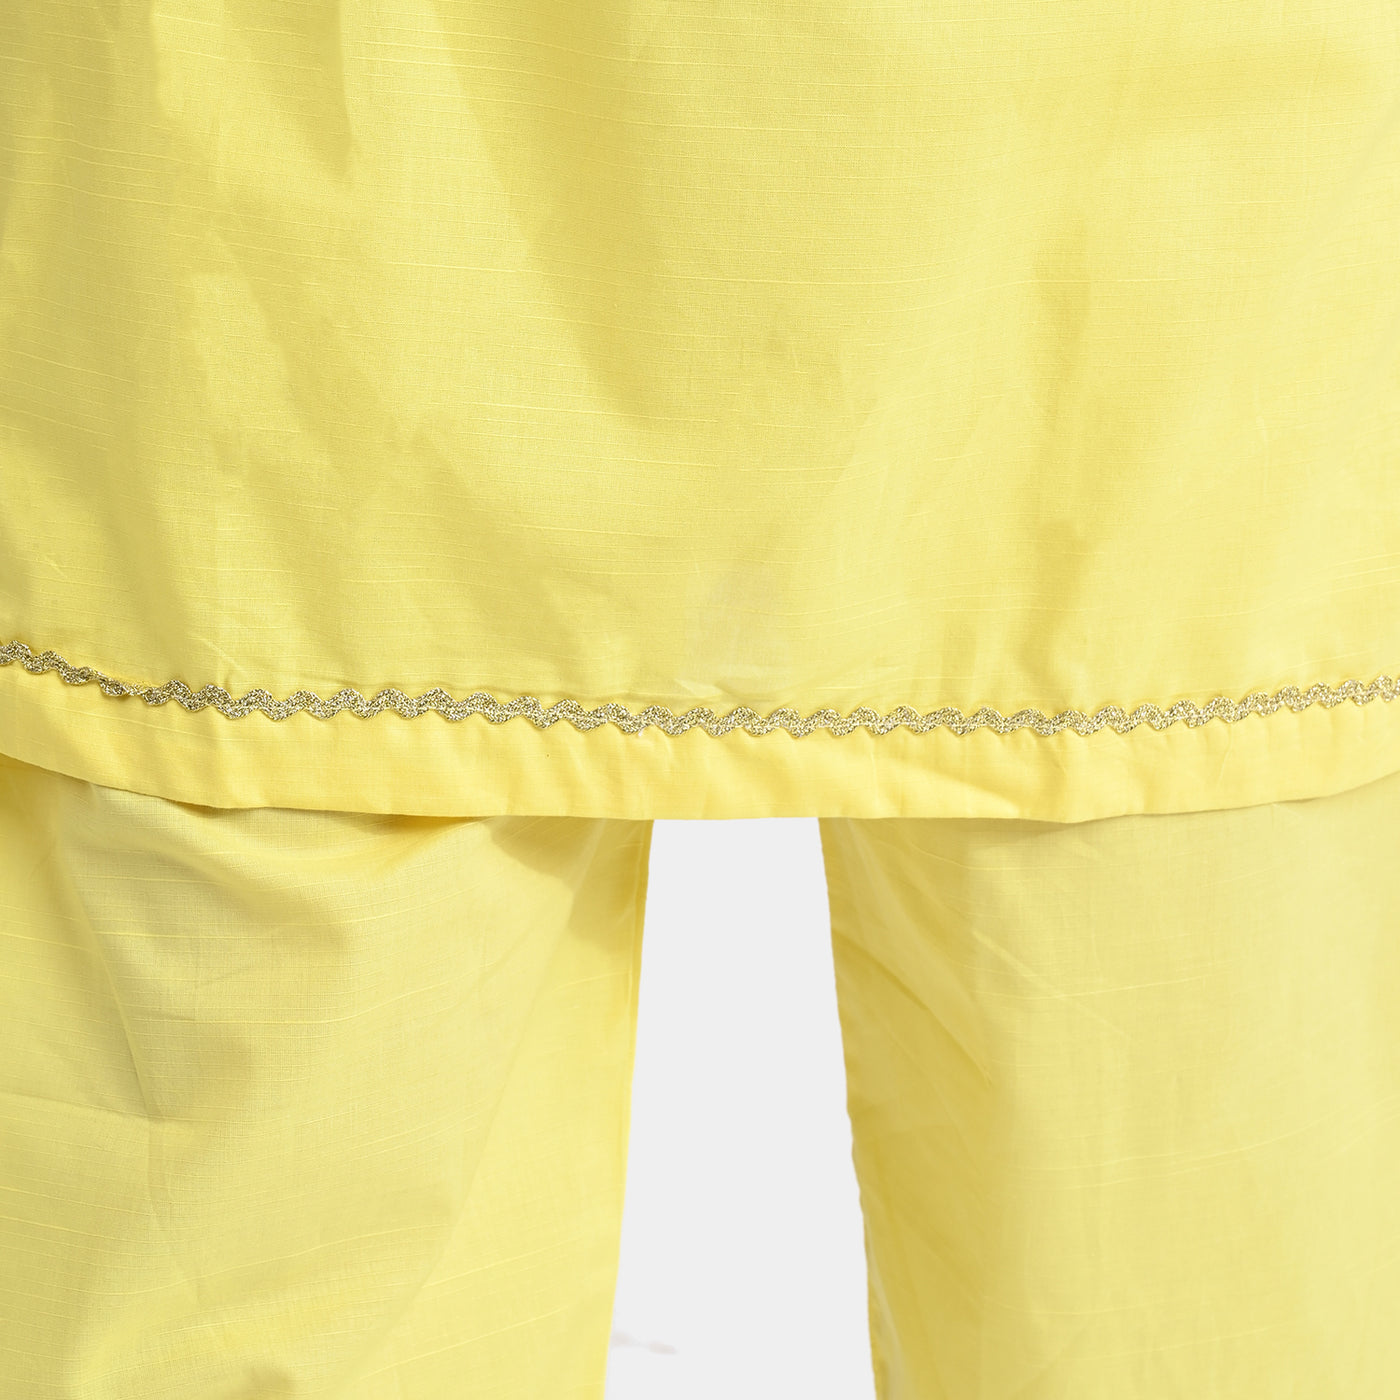 Girls Cotton Slub EMB 2PC Suit Neon Garden-B.Yellow